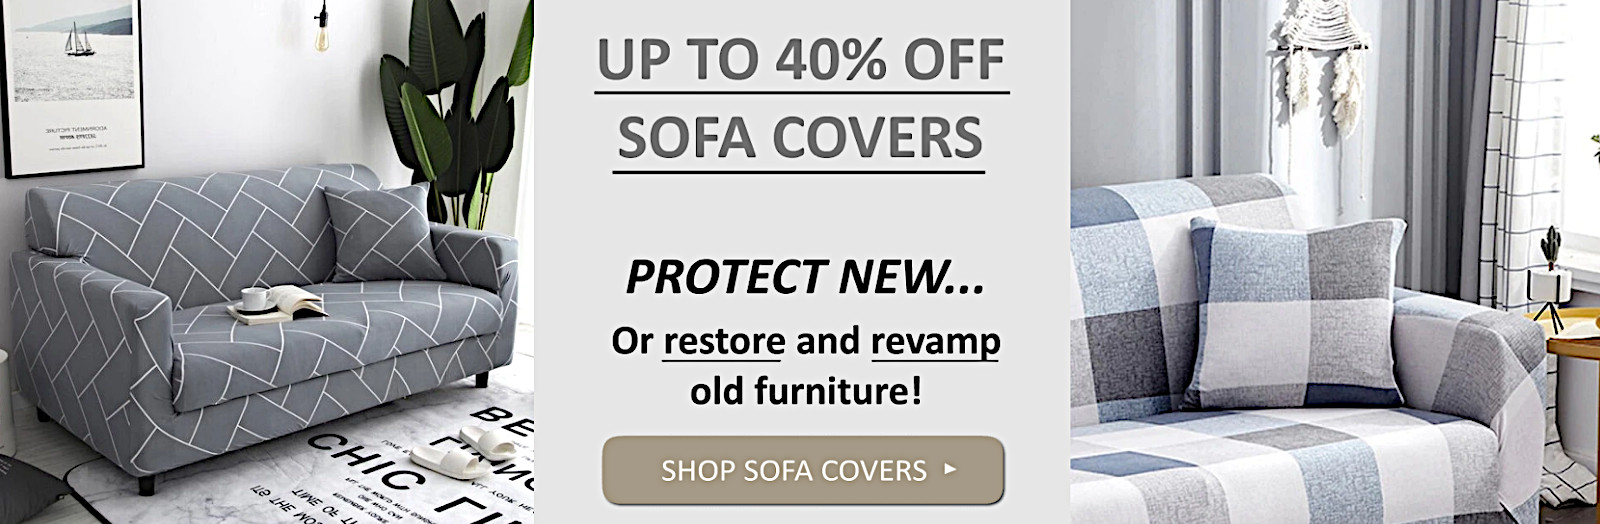 Good Value sofa covers